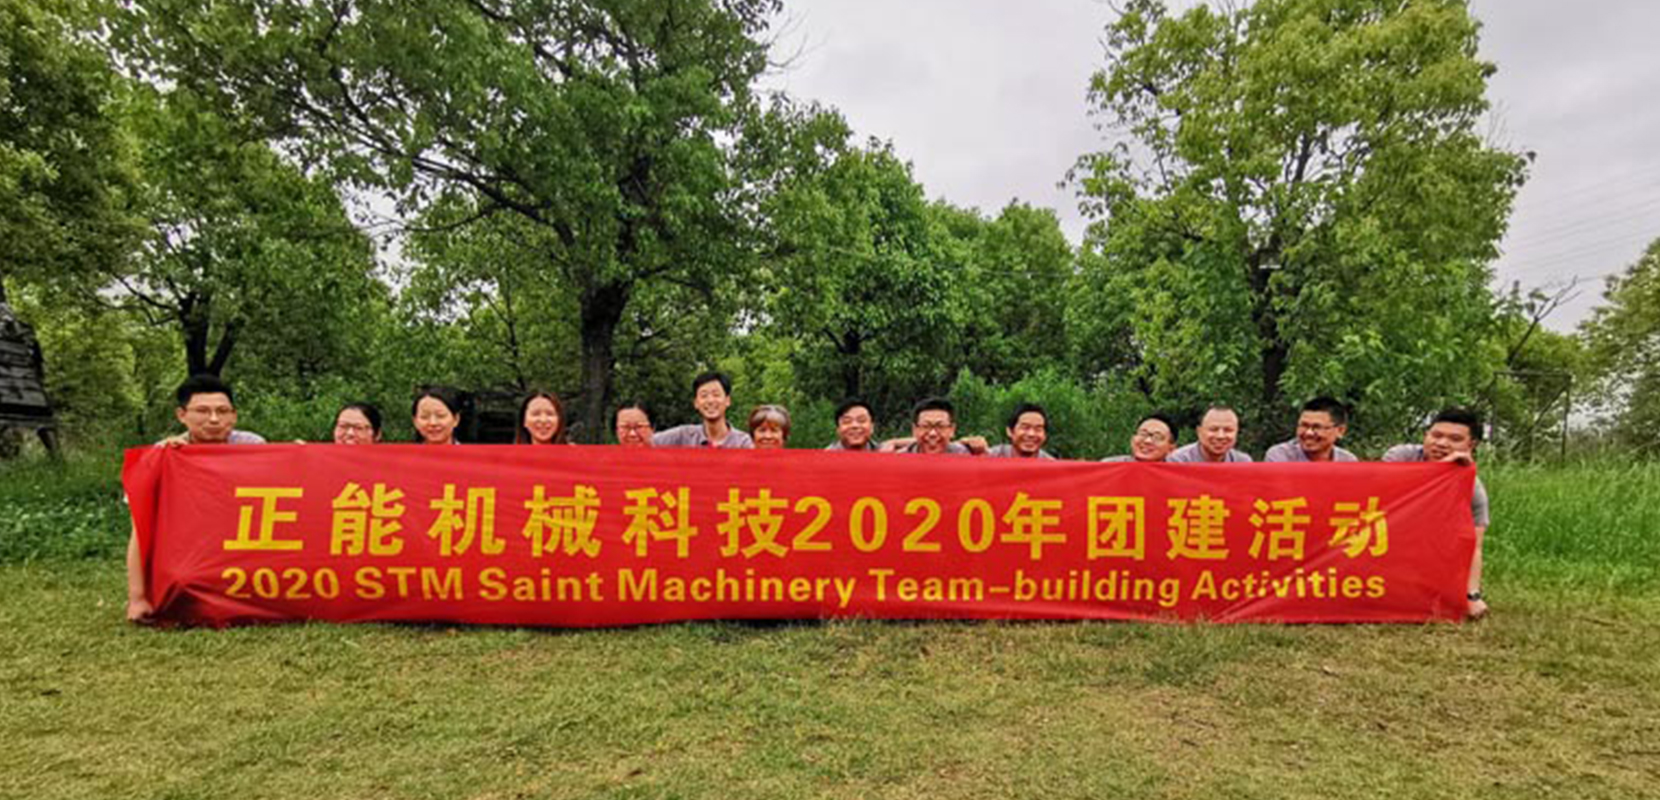 2020 STM team-building activies 2020年公司团建活动1